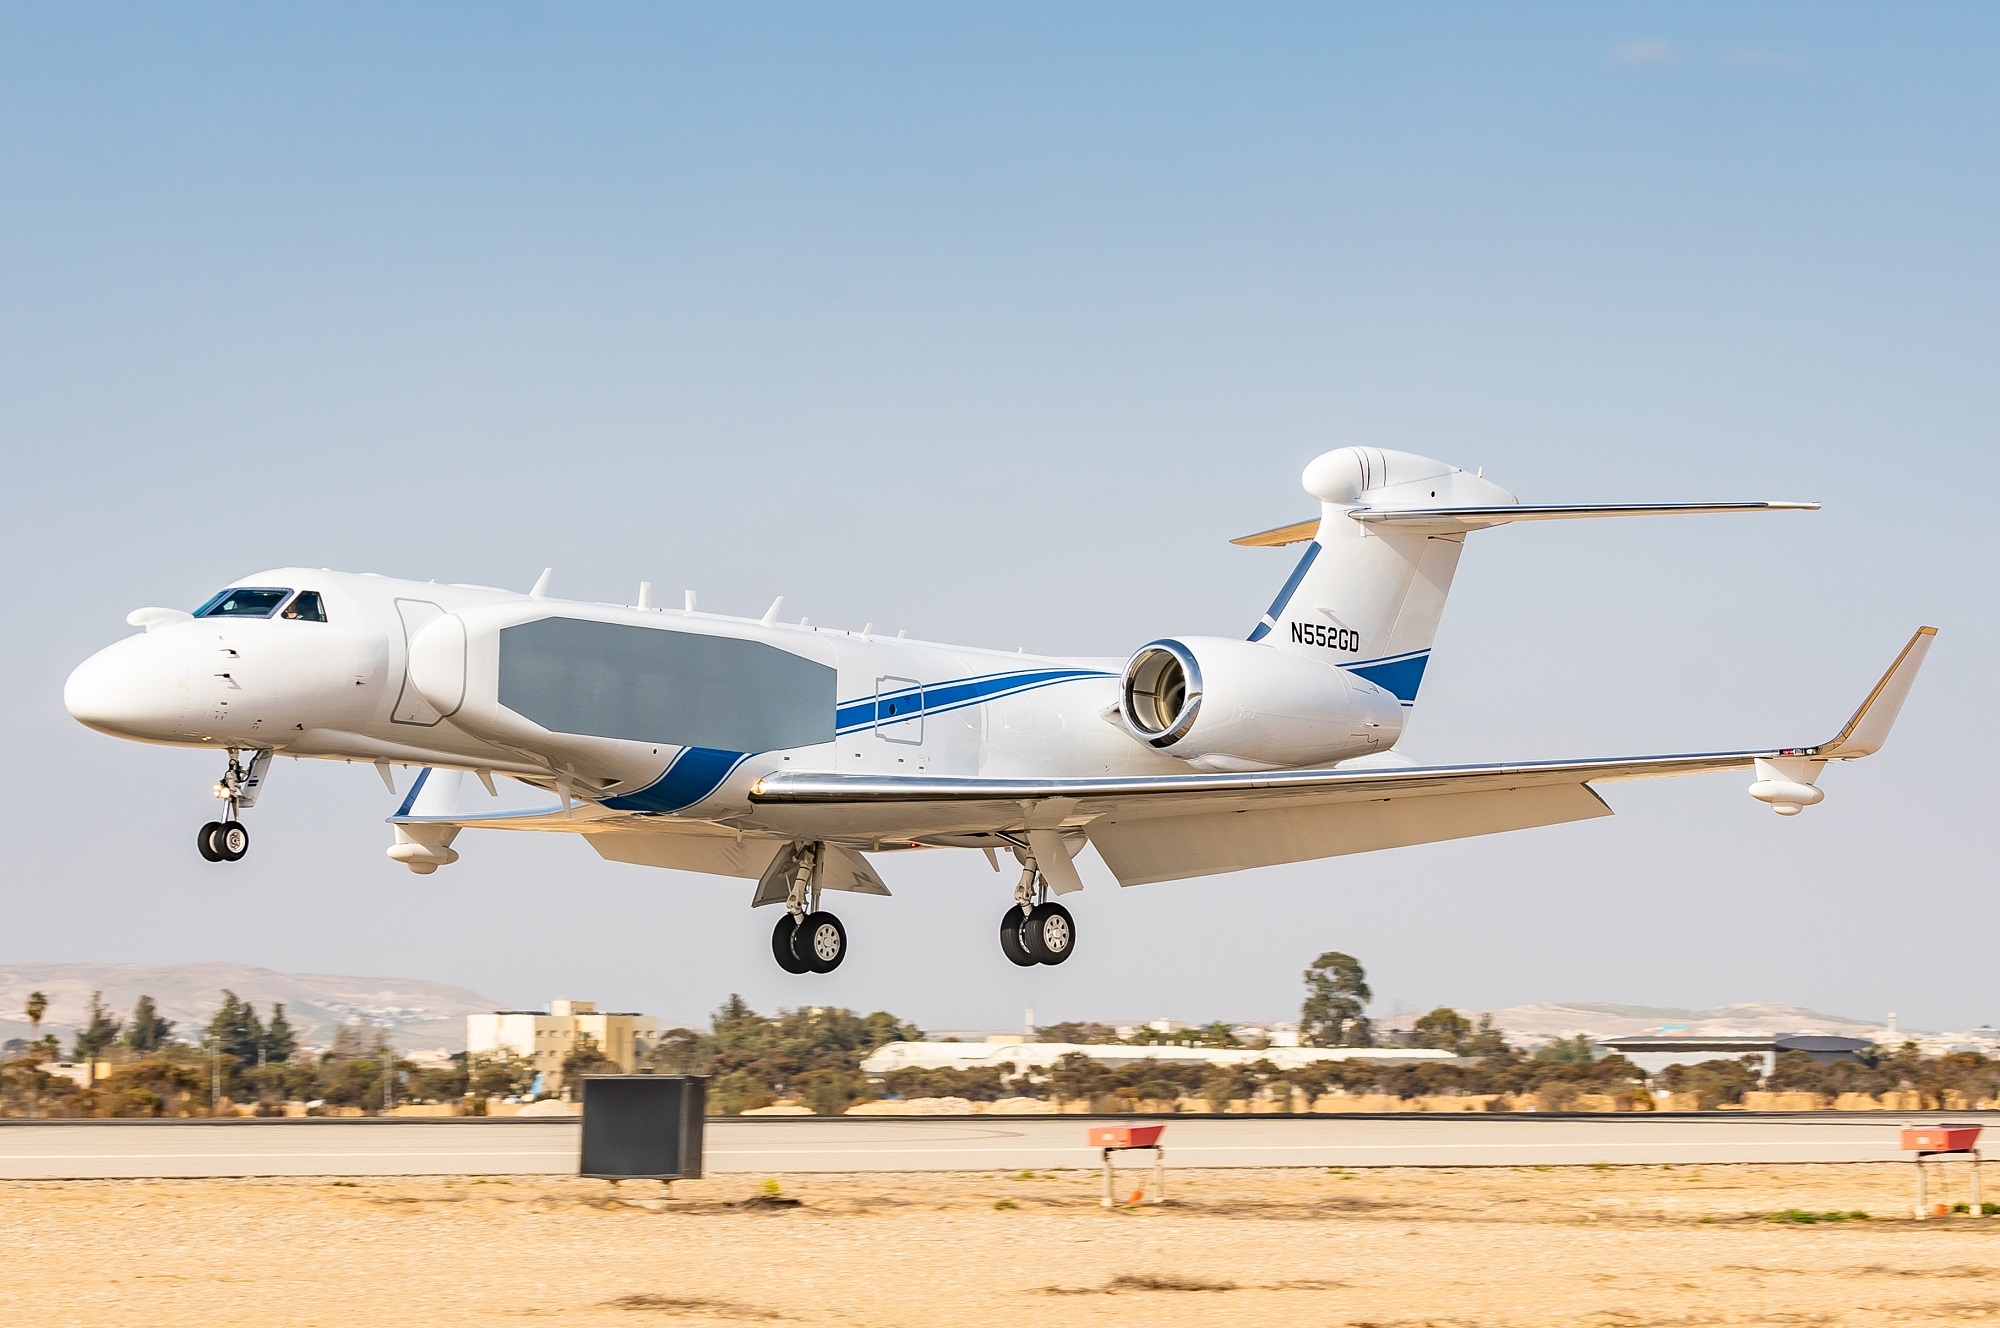 Israel Air Force Receives Oron Reconnaissance and Surveillance Aircraft